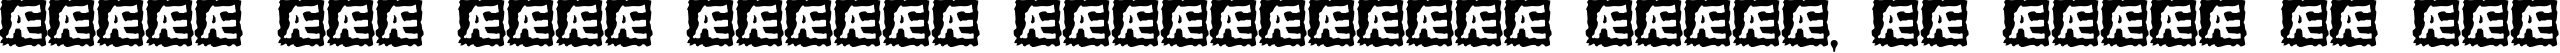 Пример написания шрифтом Draggle over kerned BRK текста на русском